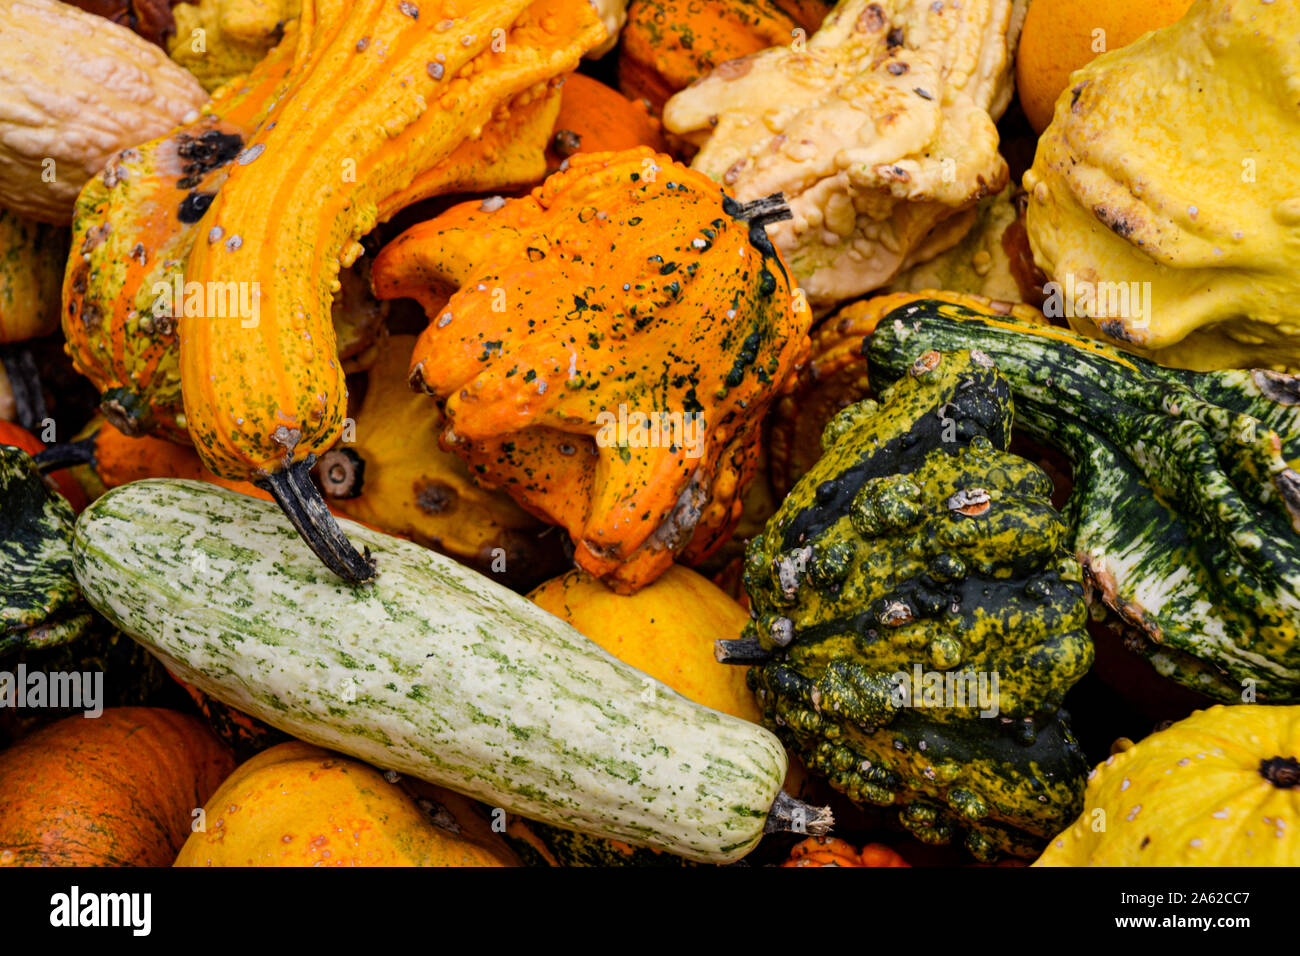 Kürbis Sammlung in verschiedenen Farben / Halloween Dekoration / Herbstdekoration / Herbstbilder / Pumpkin collection in different colors / halloween Stock Photo